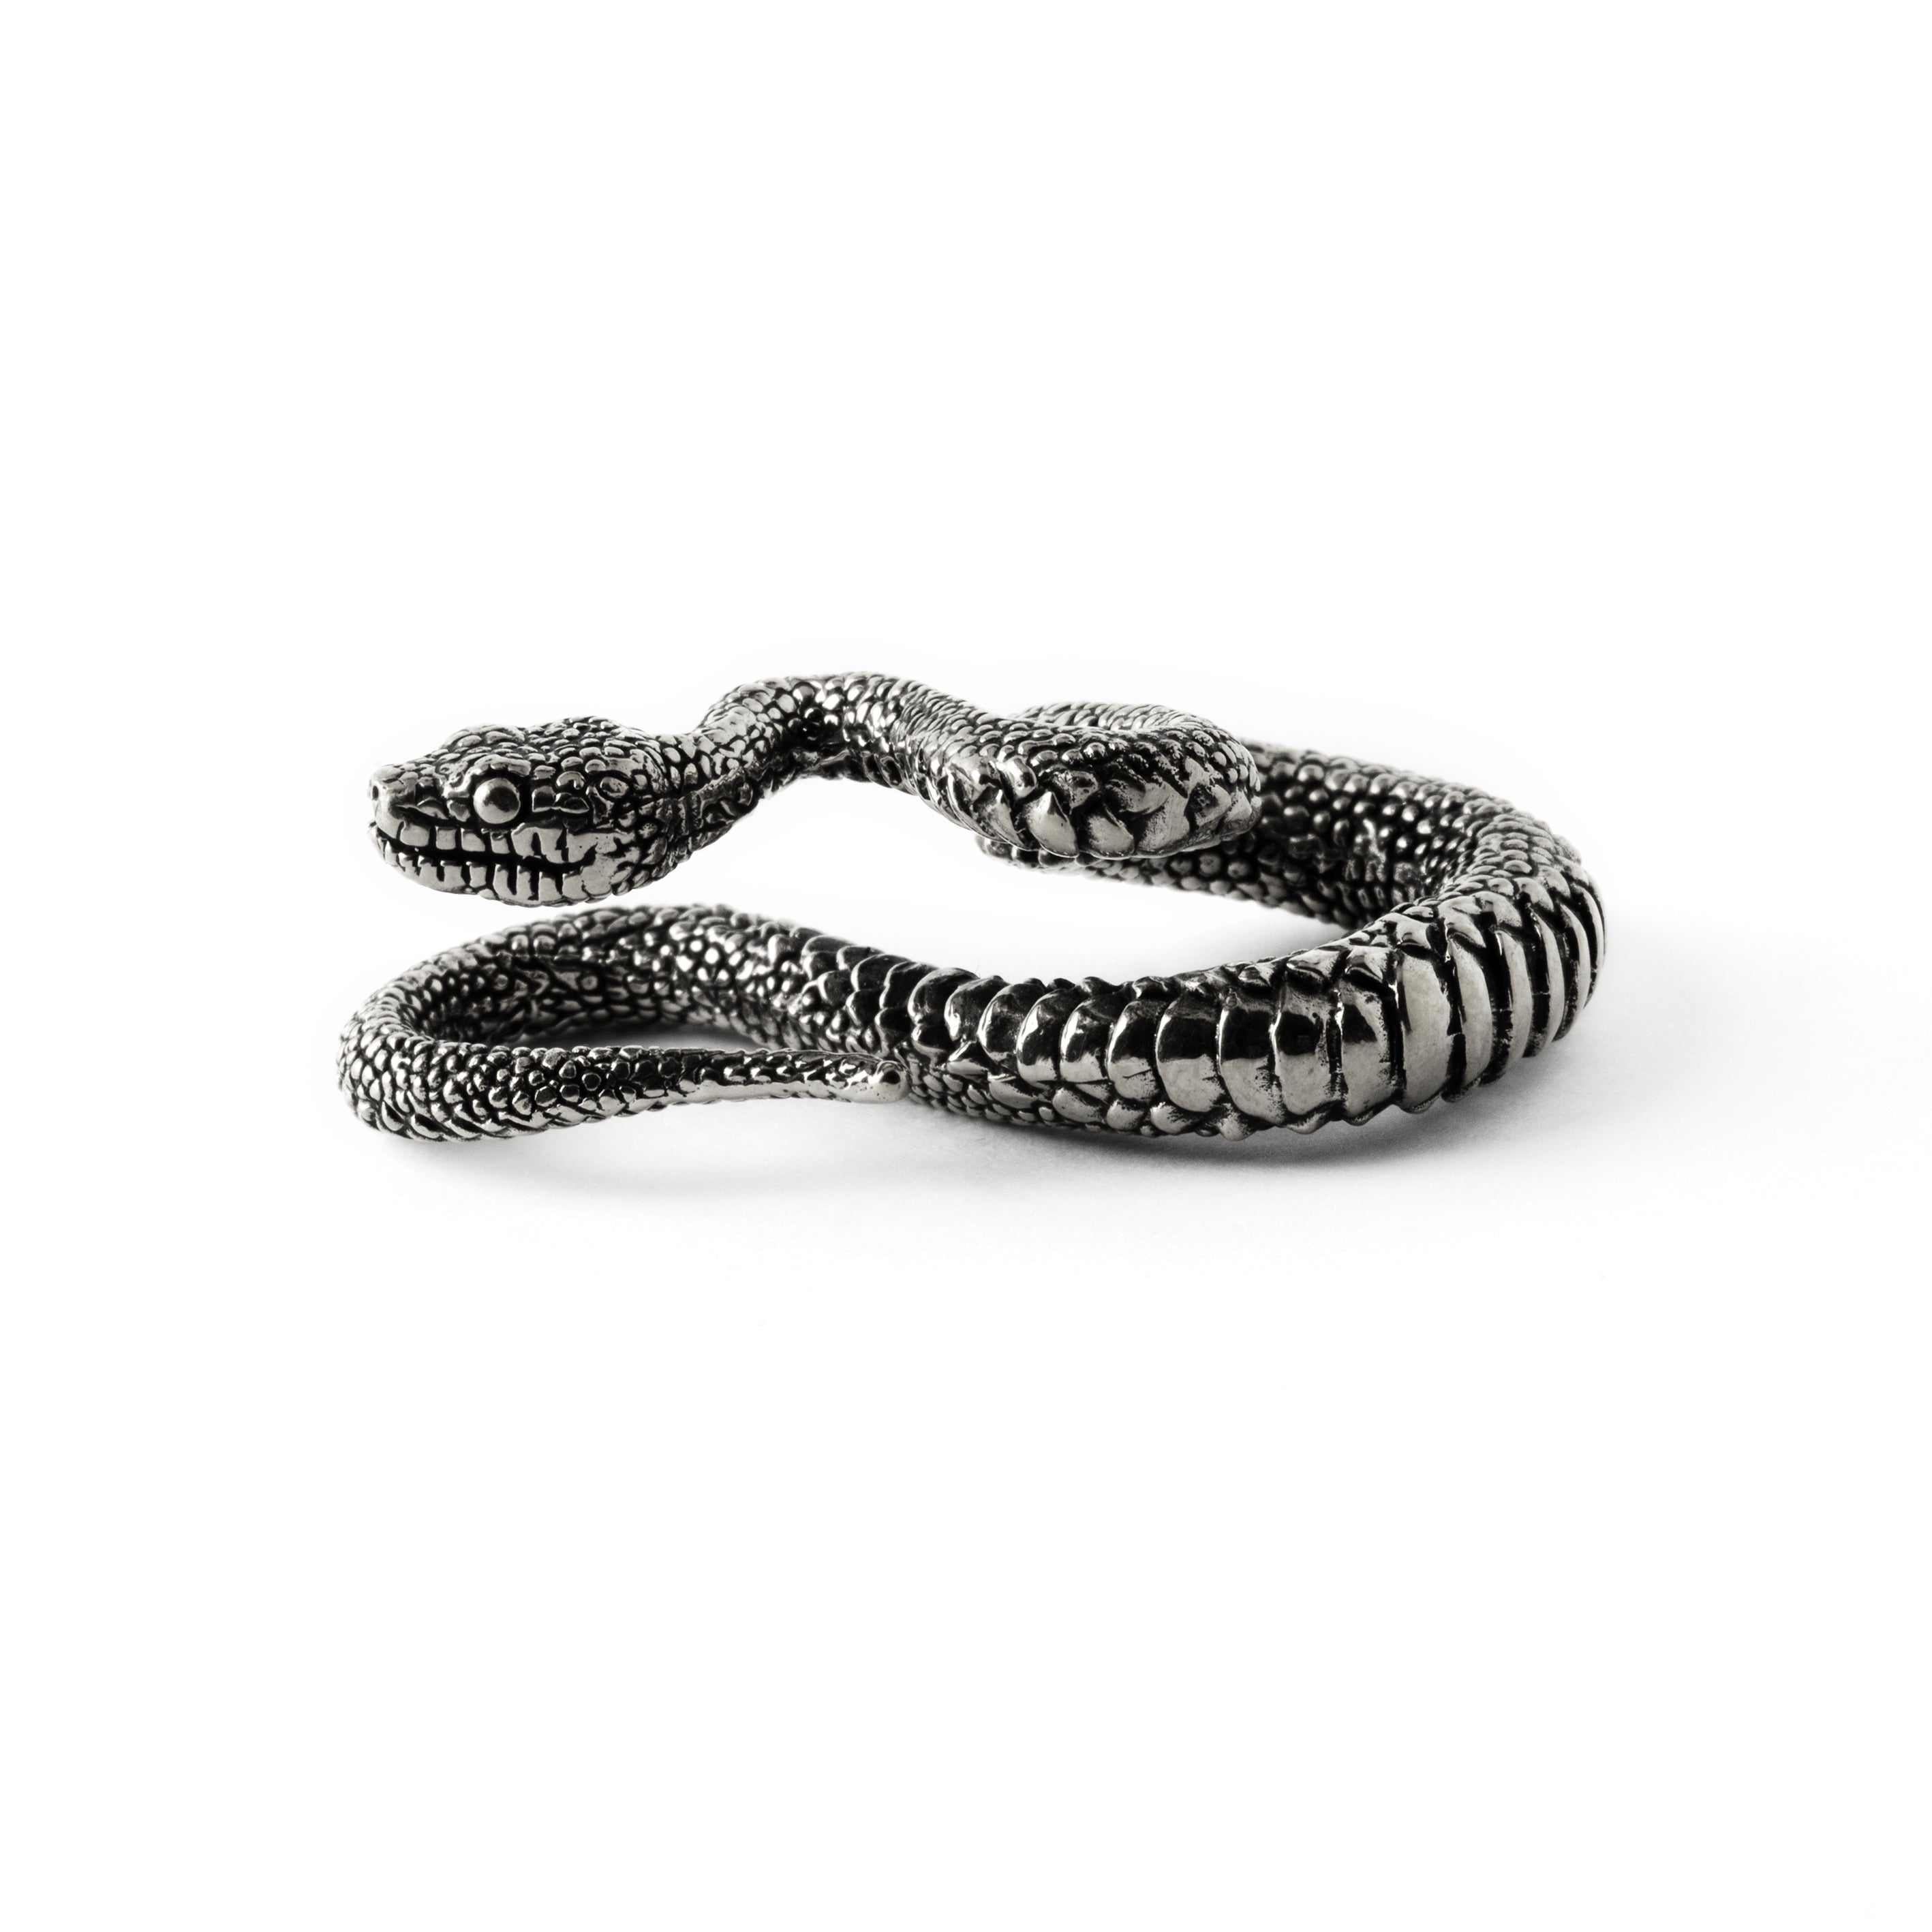 single silver brass snake ear weights hangers in infinity shape close left side view